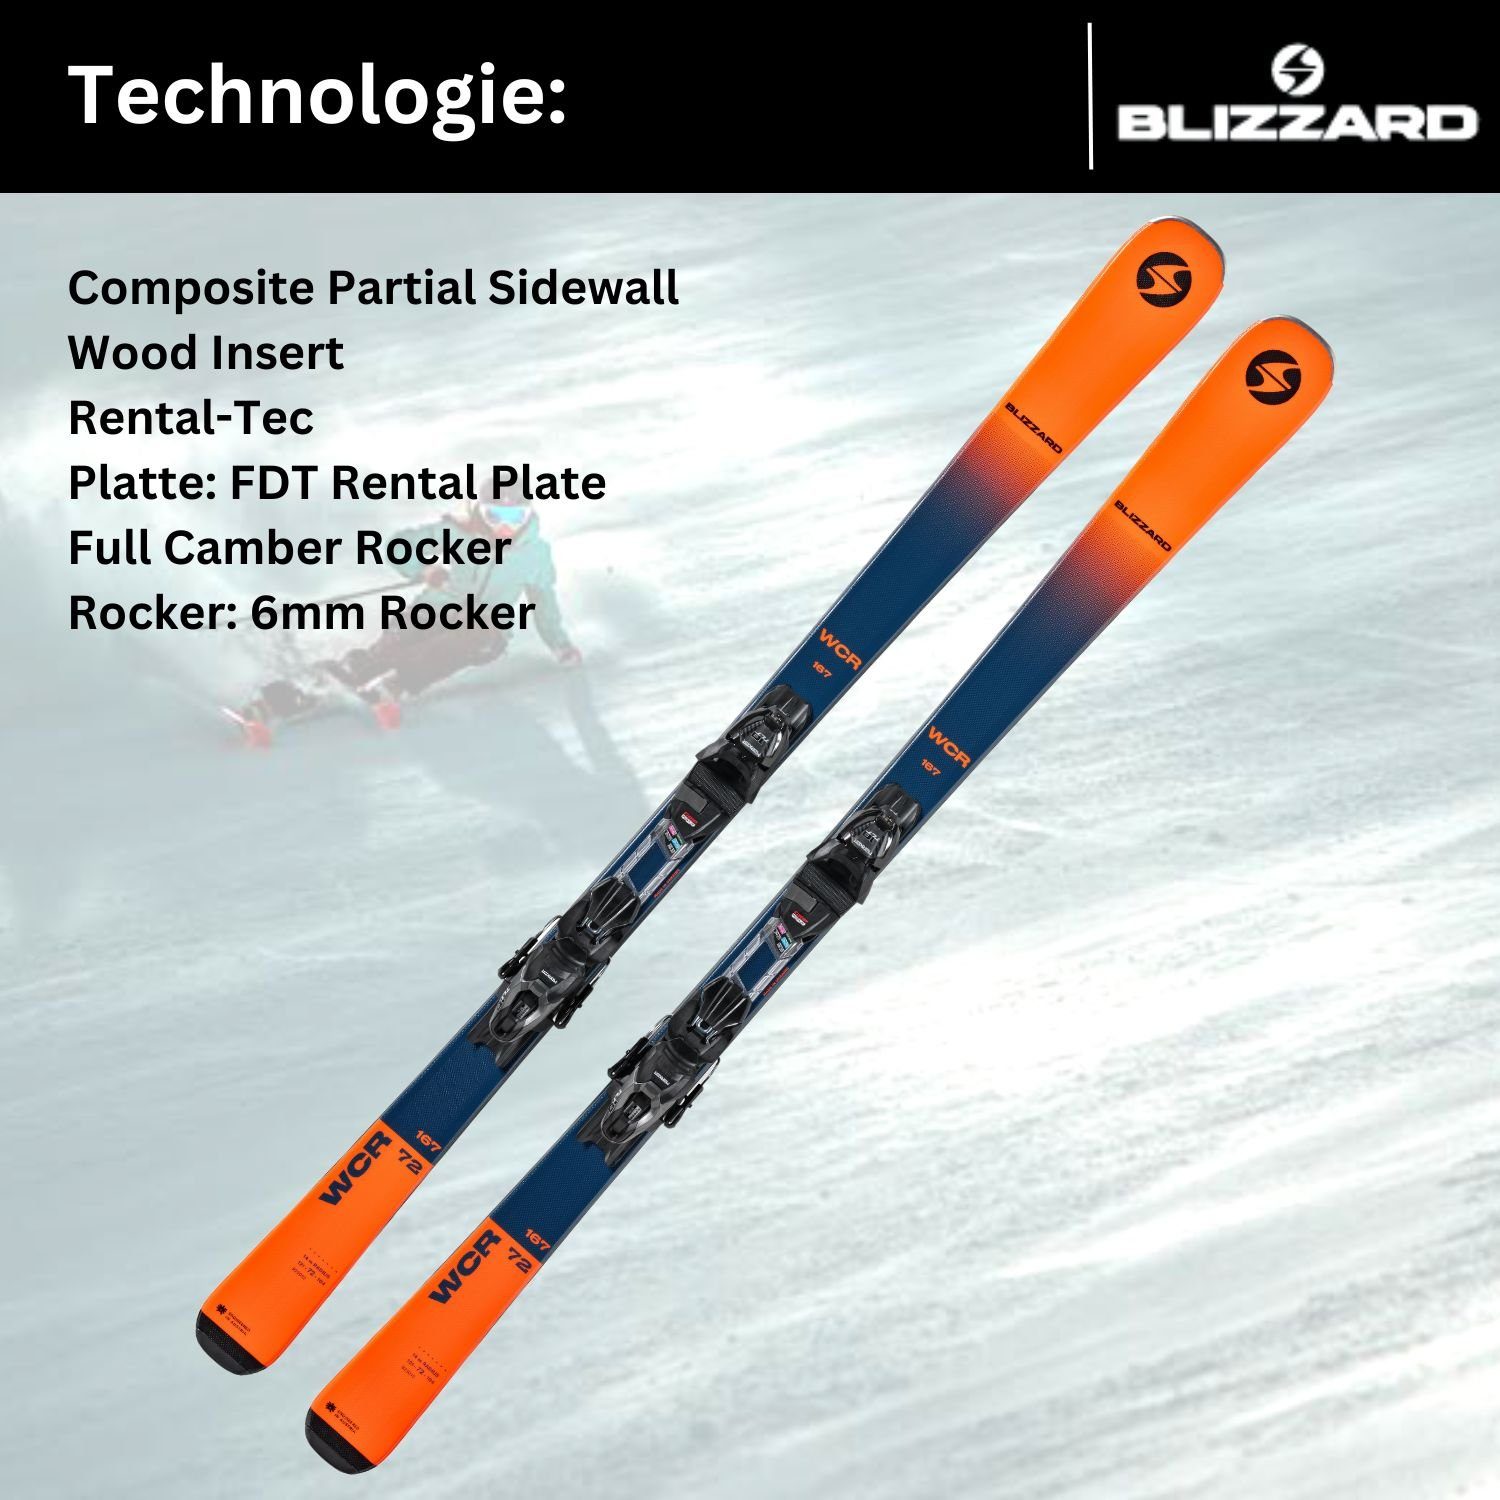 Ski Bindung Z3-10 Ski, BLIZZARD grau/blau 10 Rocker + Blizzard TLT Marker Camber Full WCR